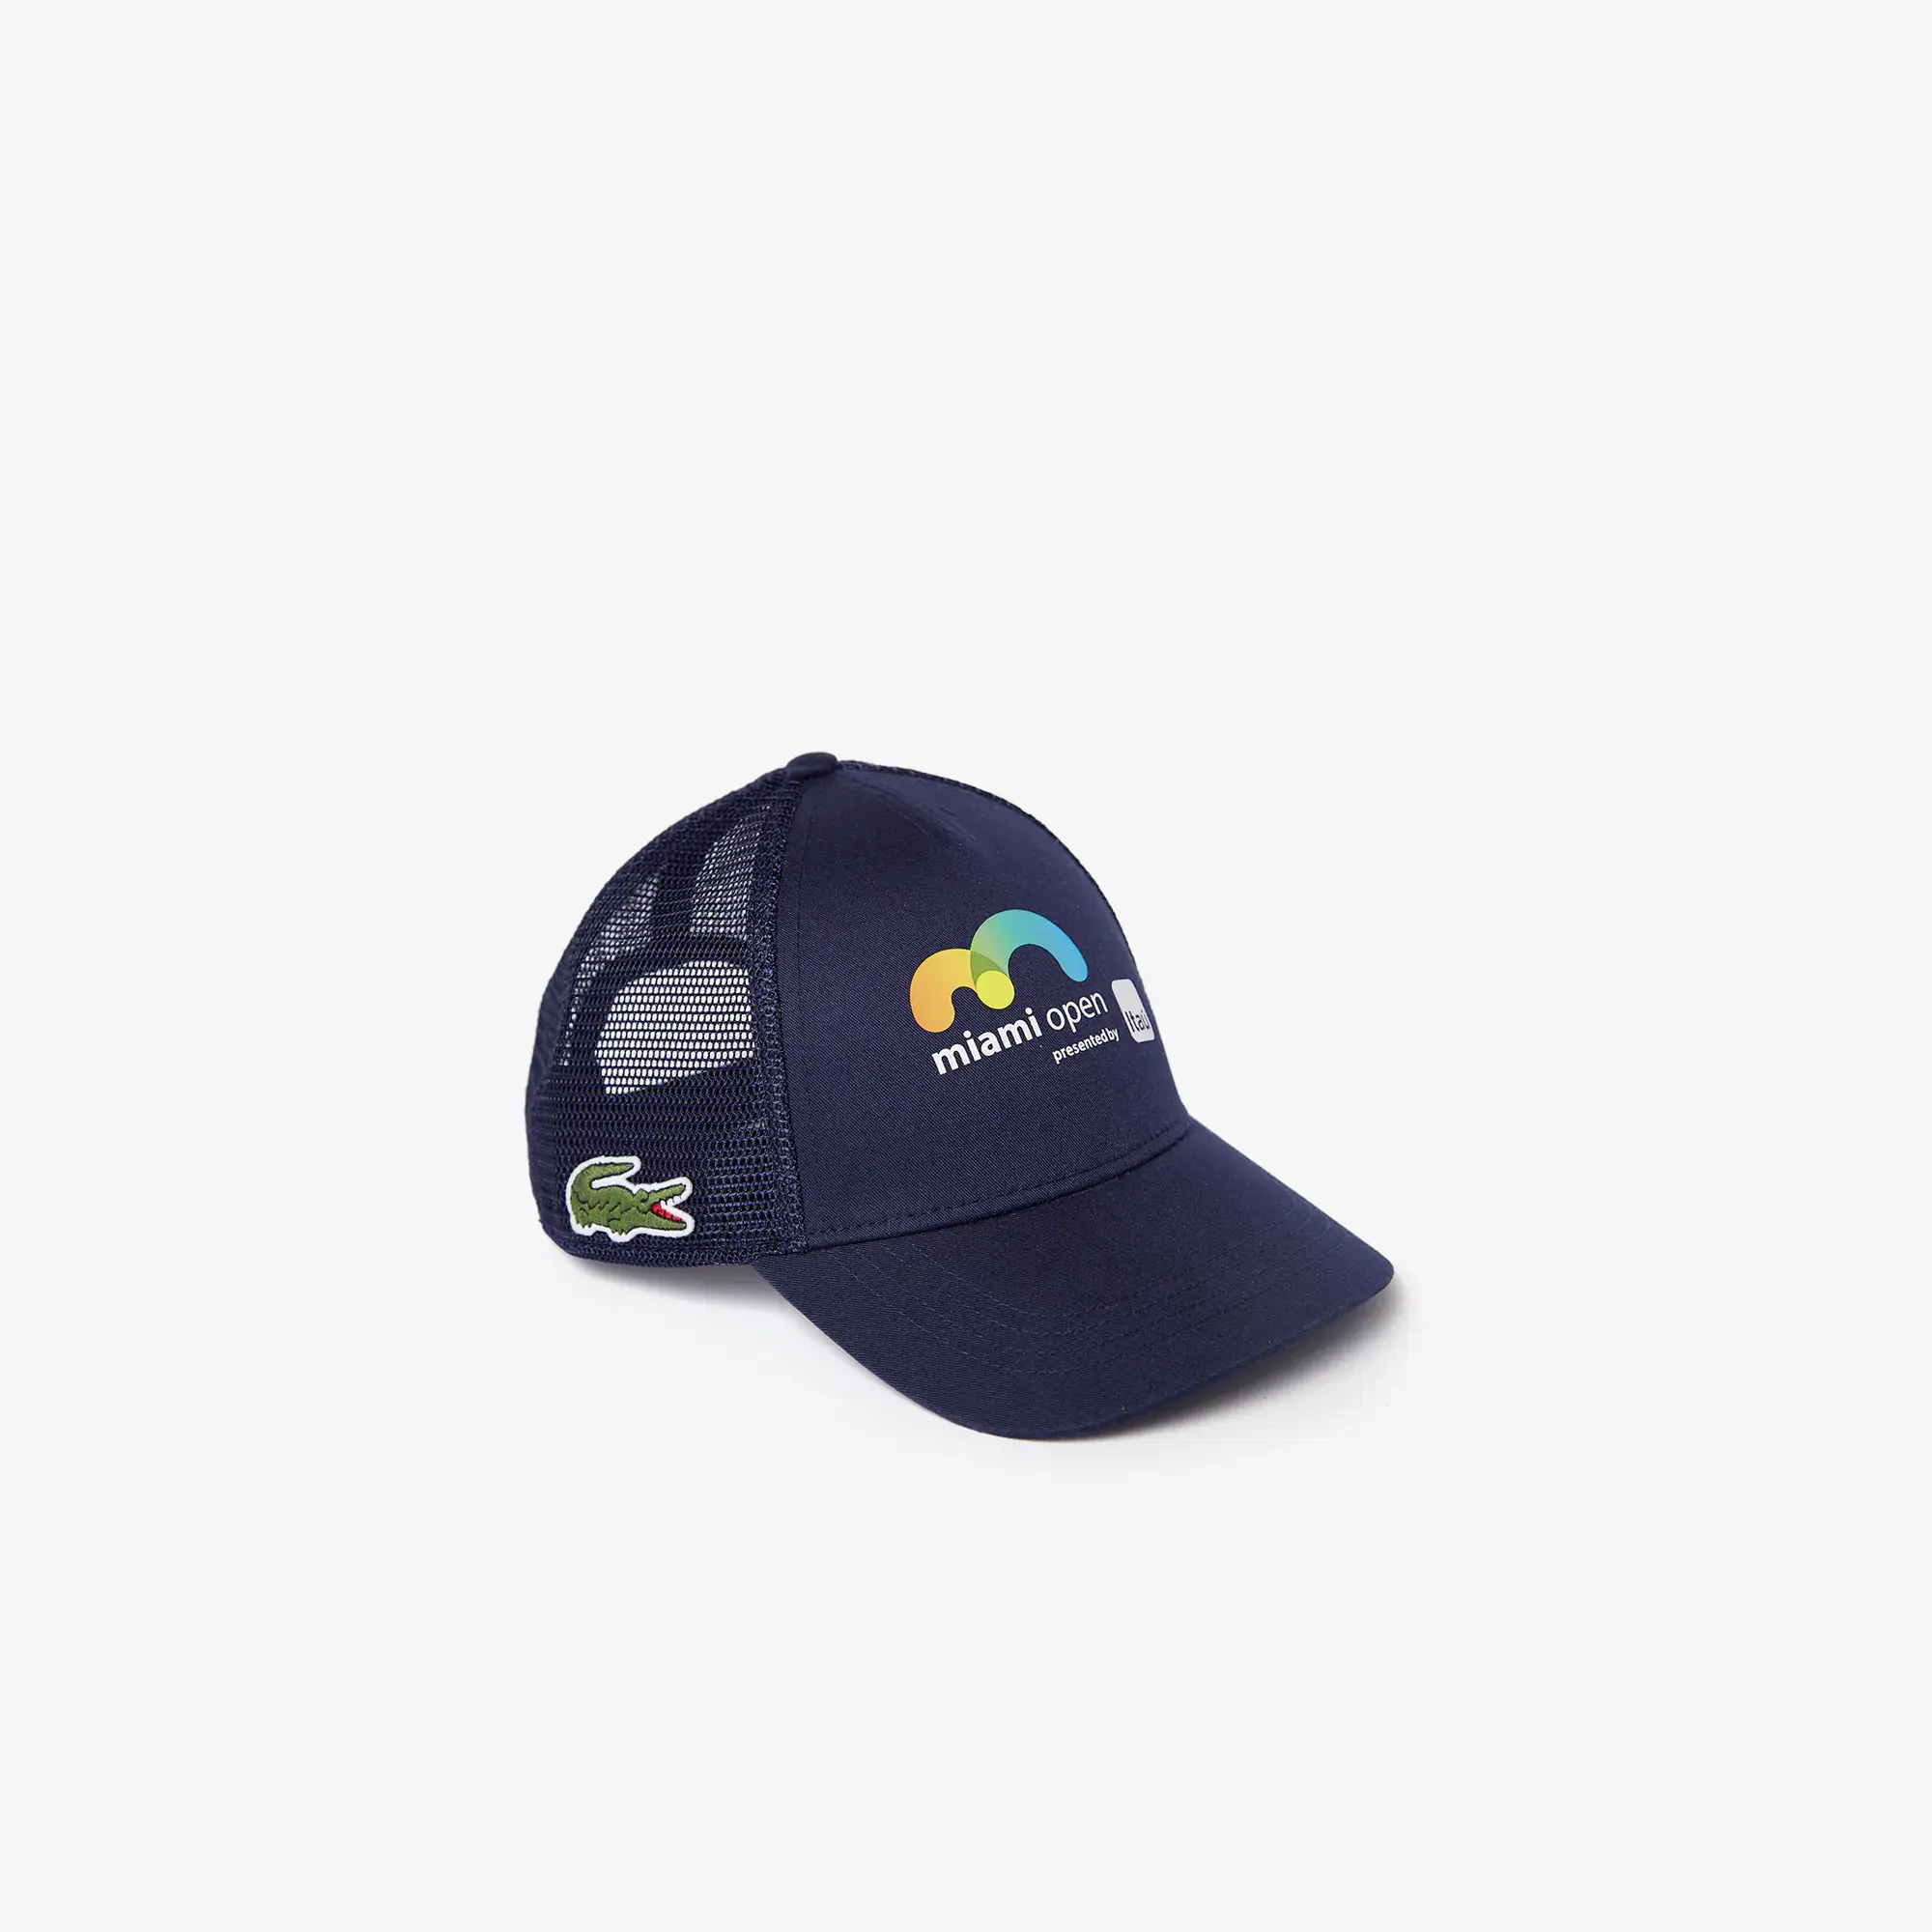 Lacoste Men's Miami Open Hat. 1